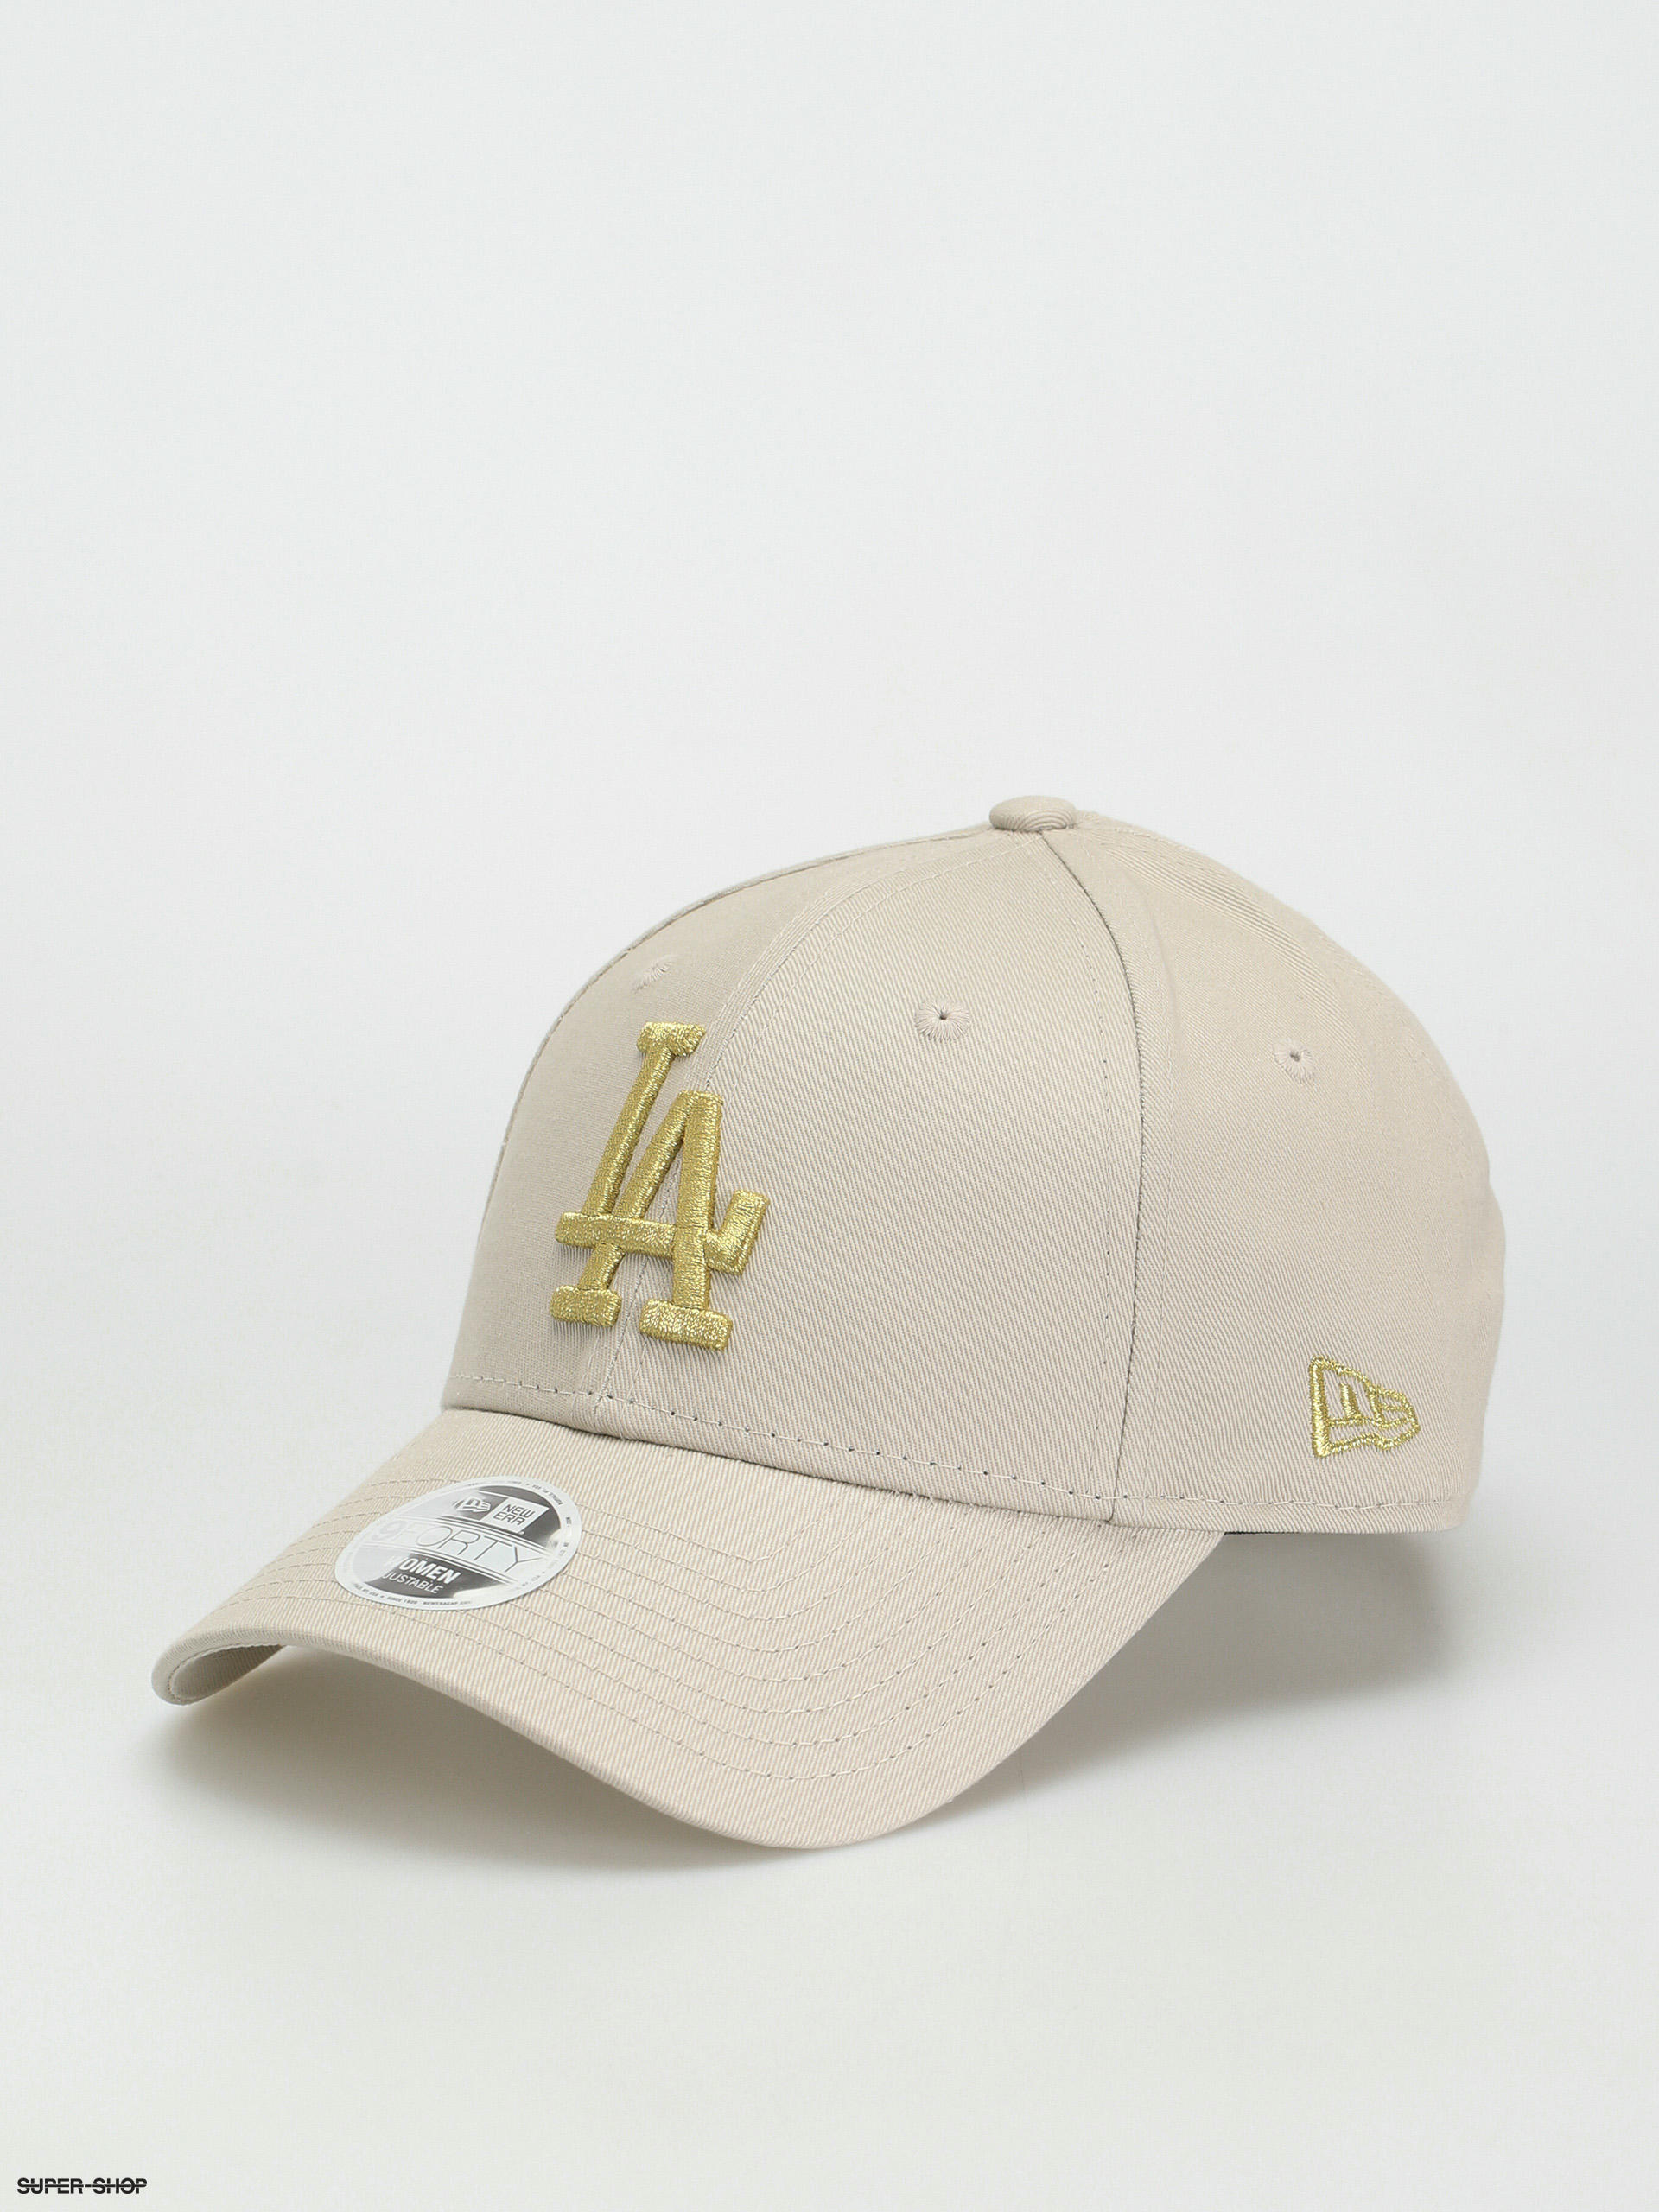 dodgers gold hat